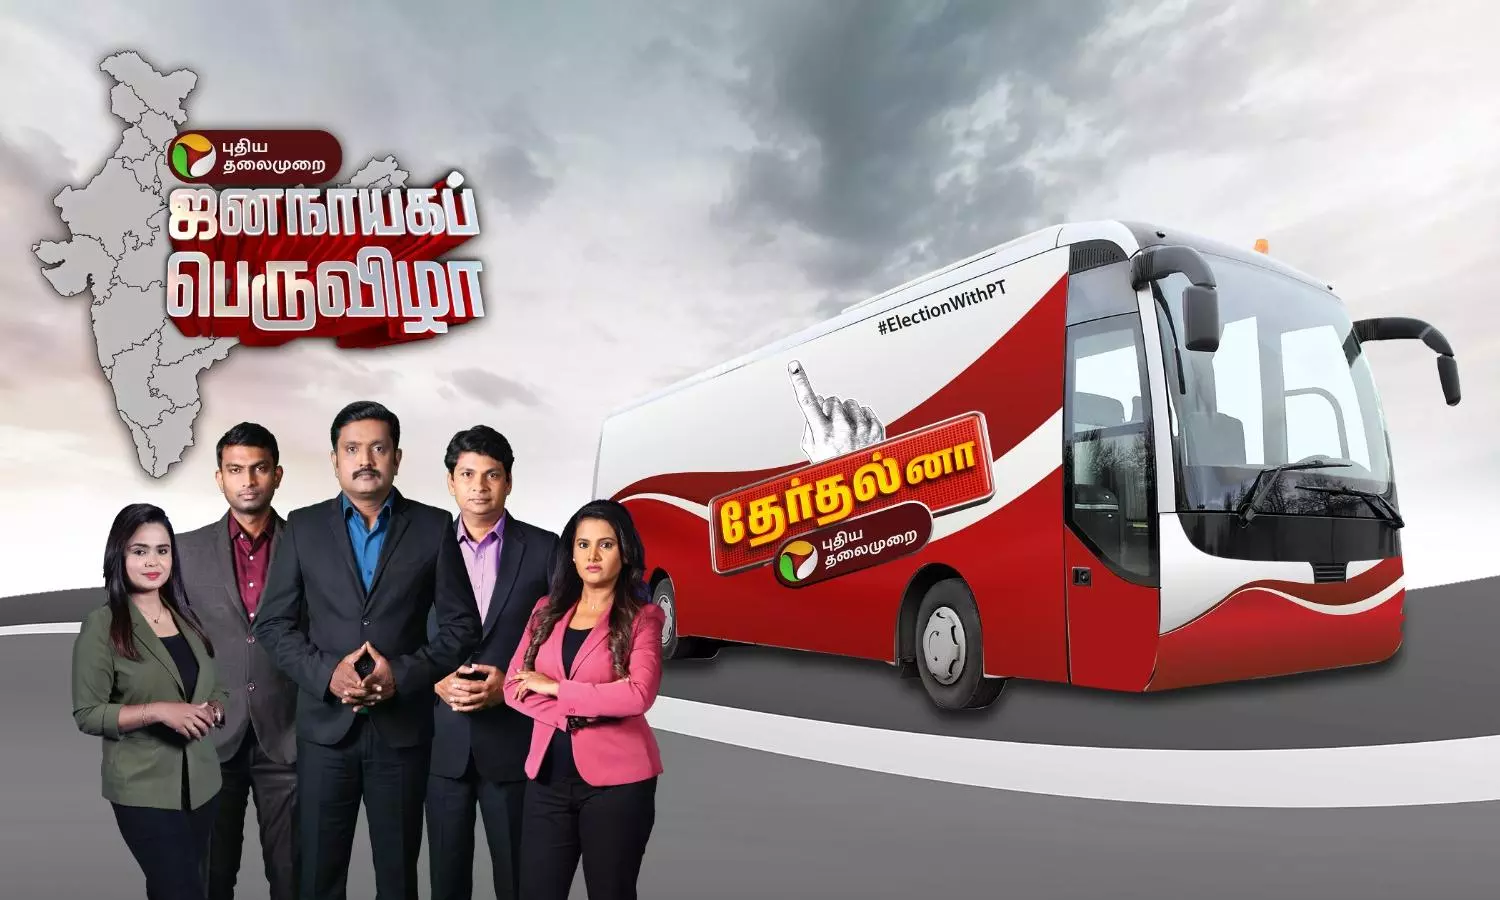 Puthiyathalaimurai starts election bus to cover Tamil Nadu